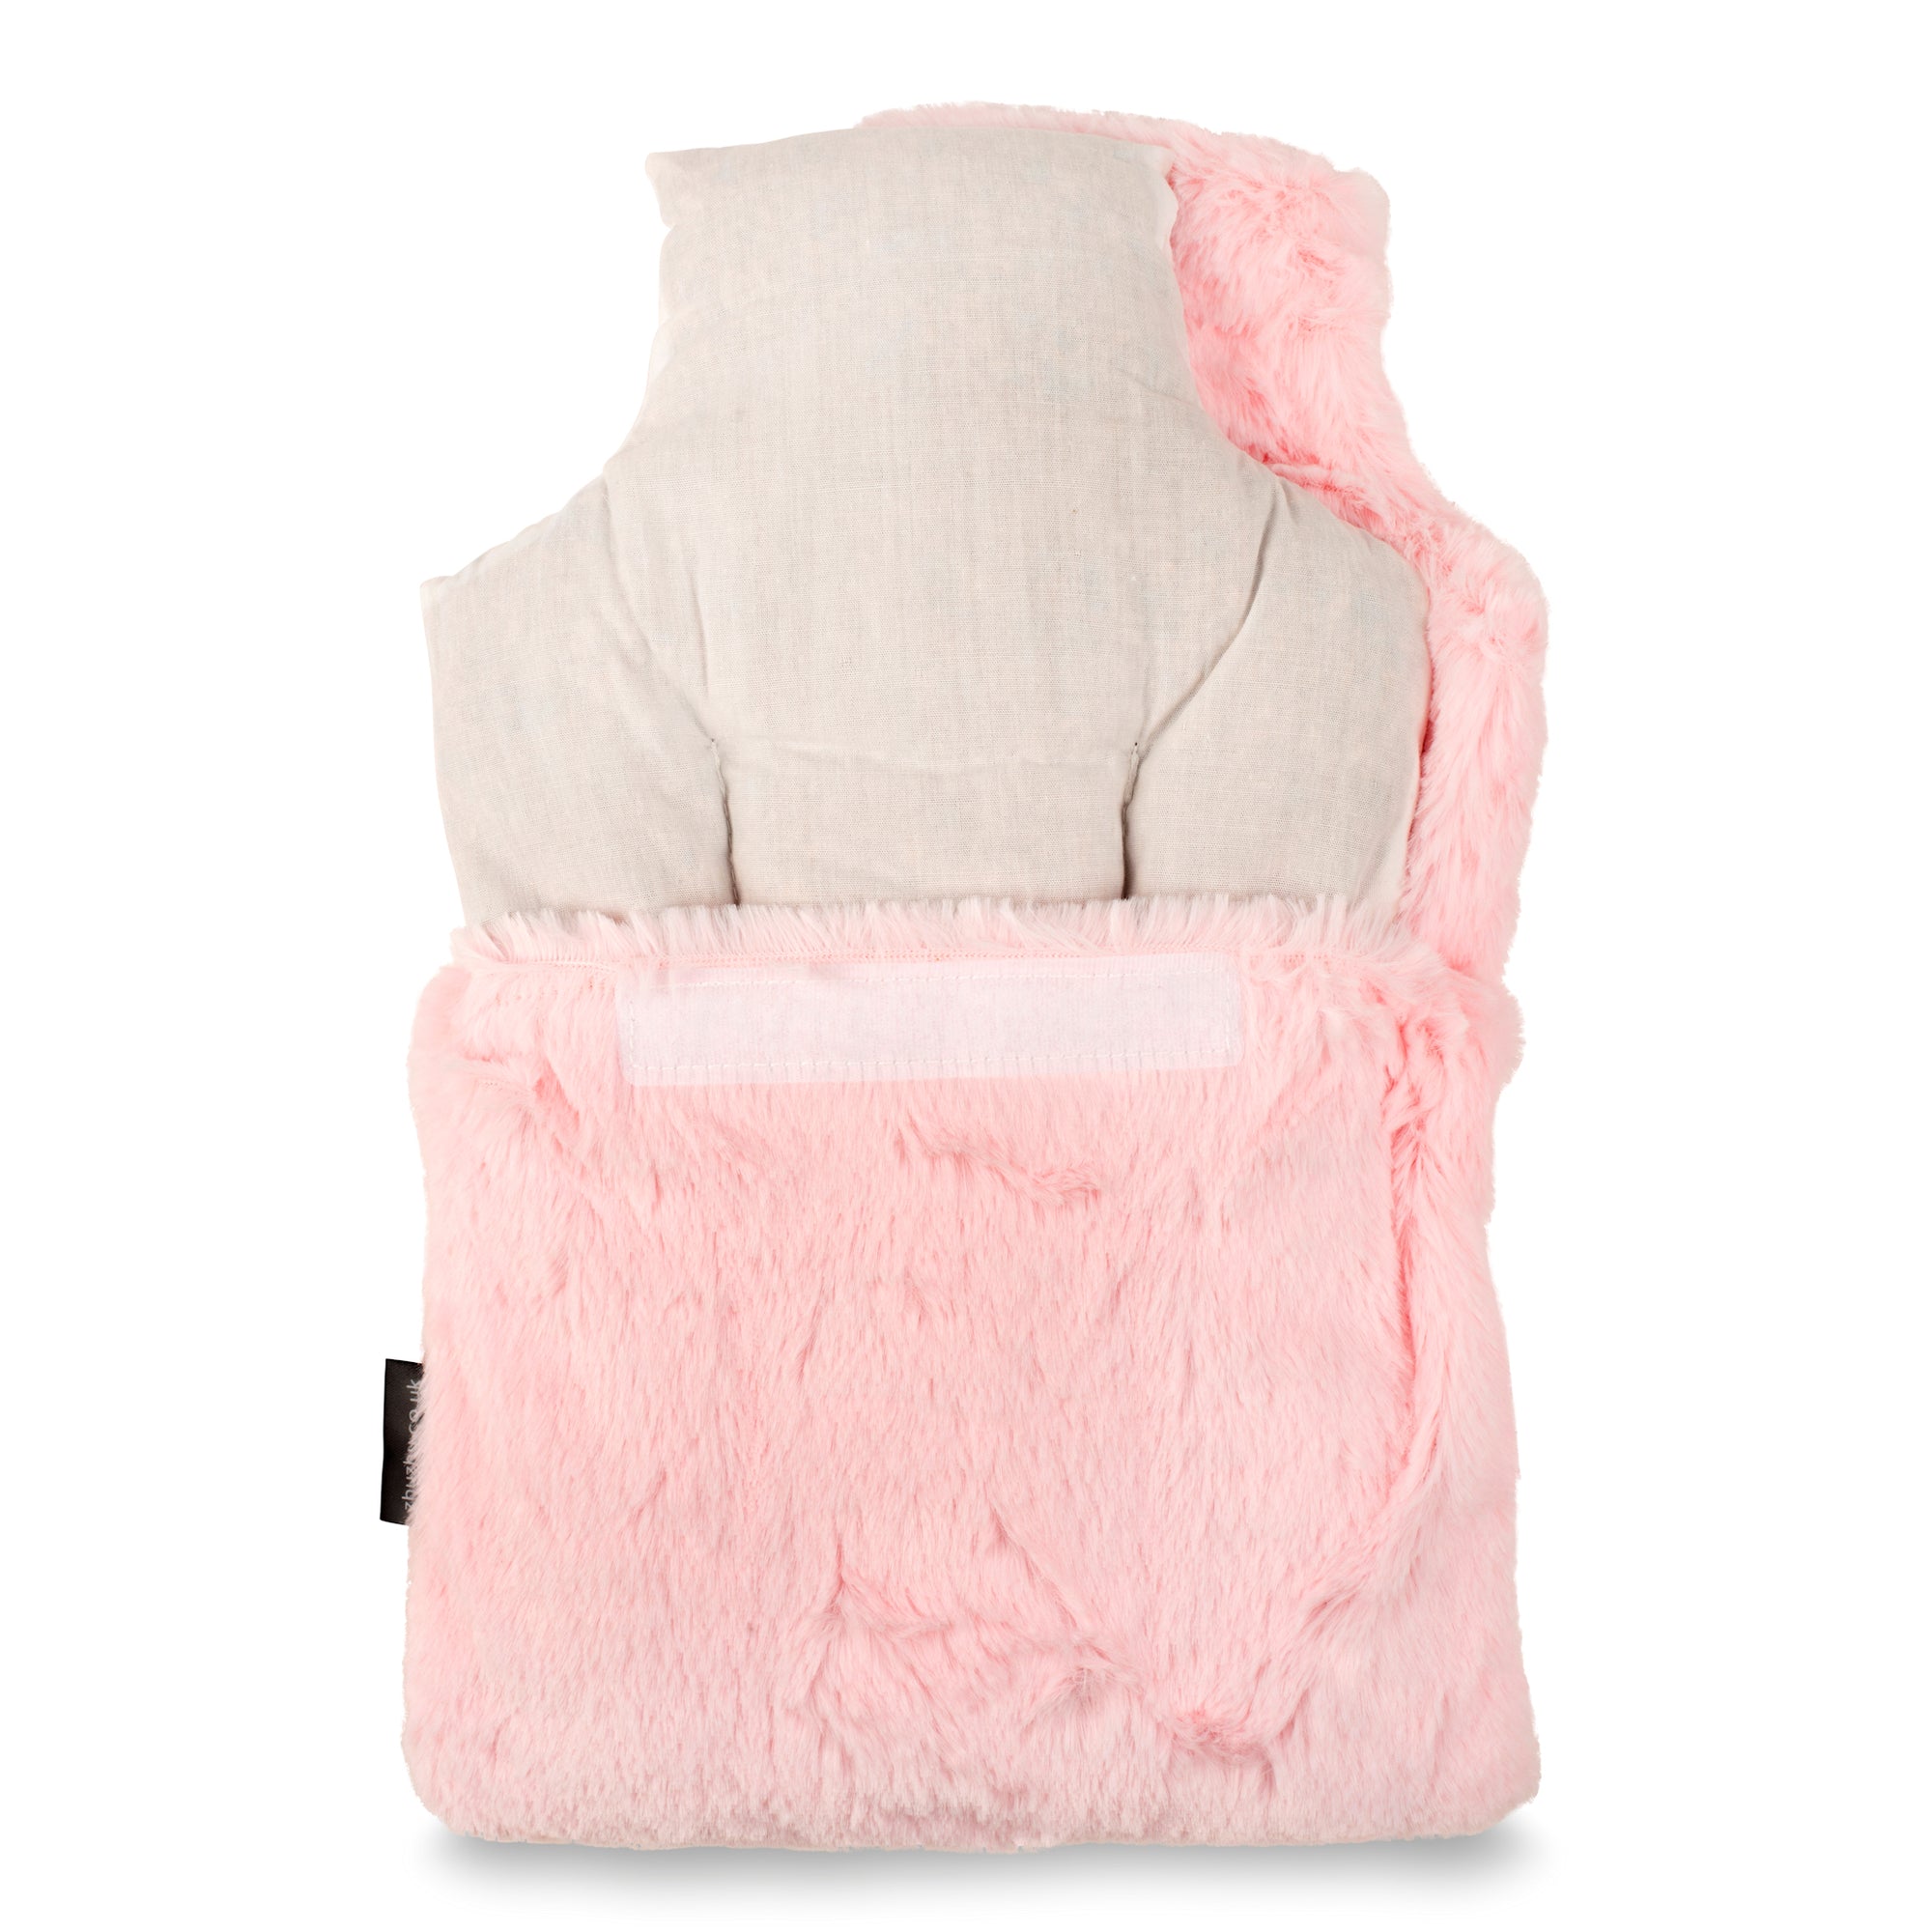 Zhu-Zhu Pink Plush Hot Bottle Body Warmer - Microwavable Wheat Bag